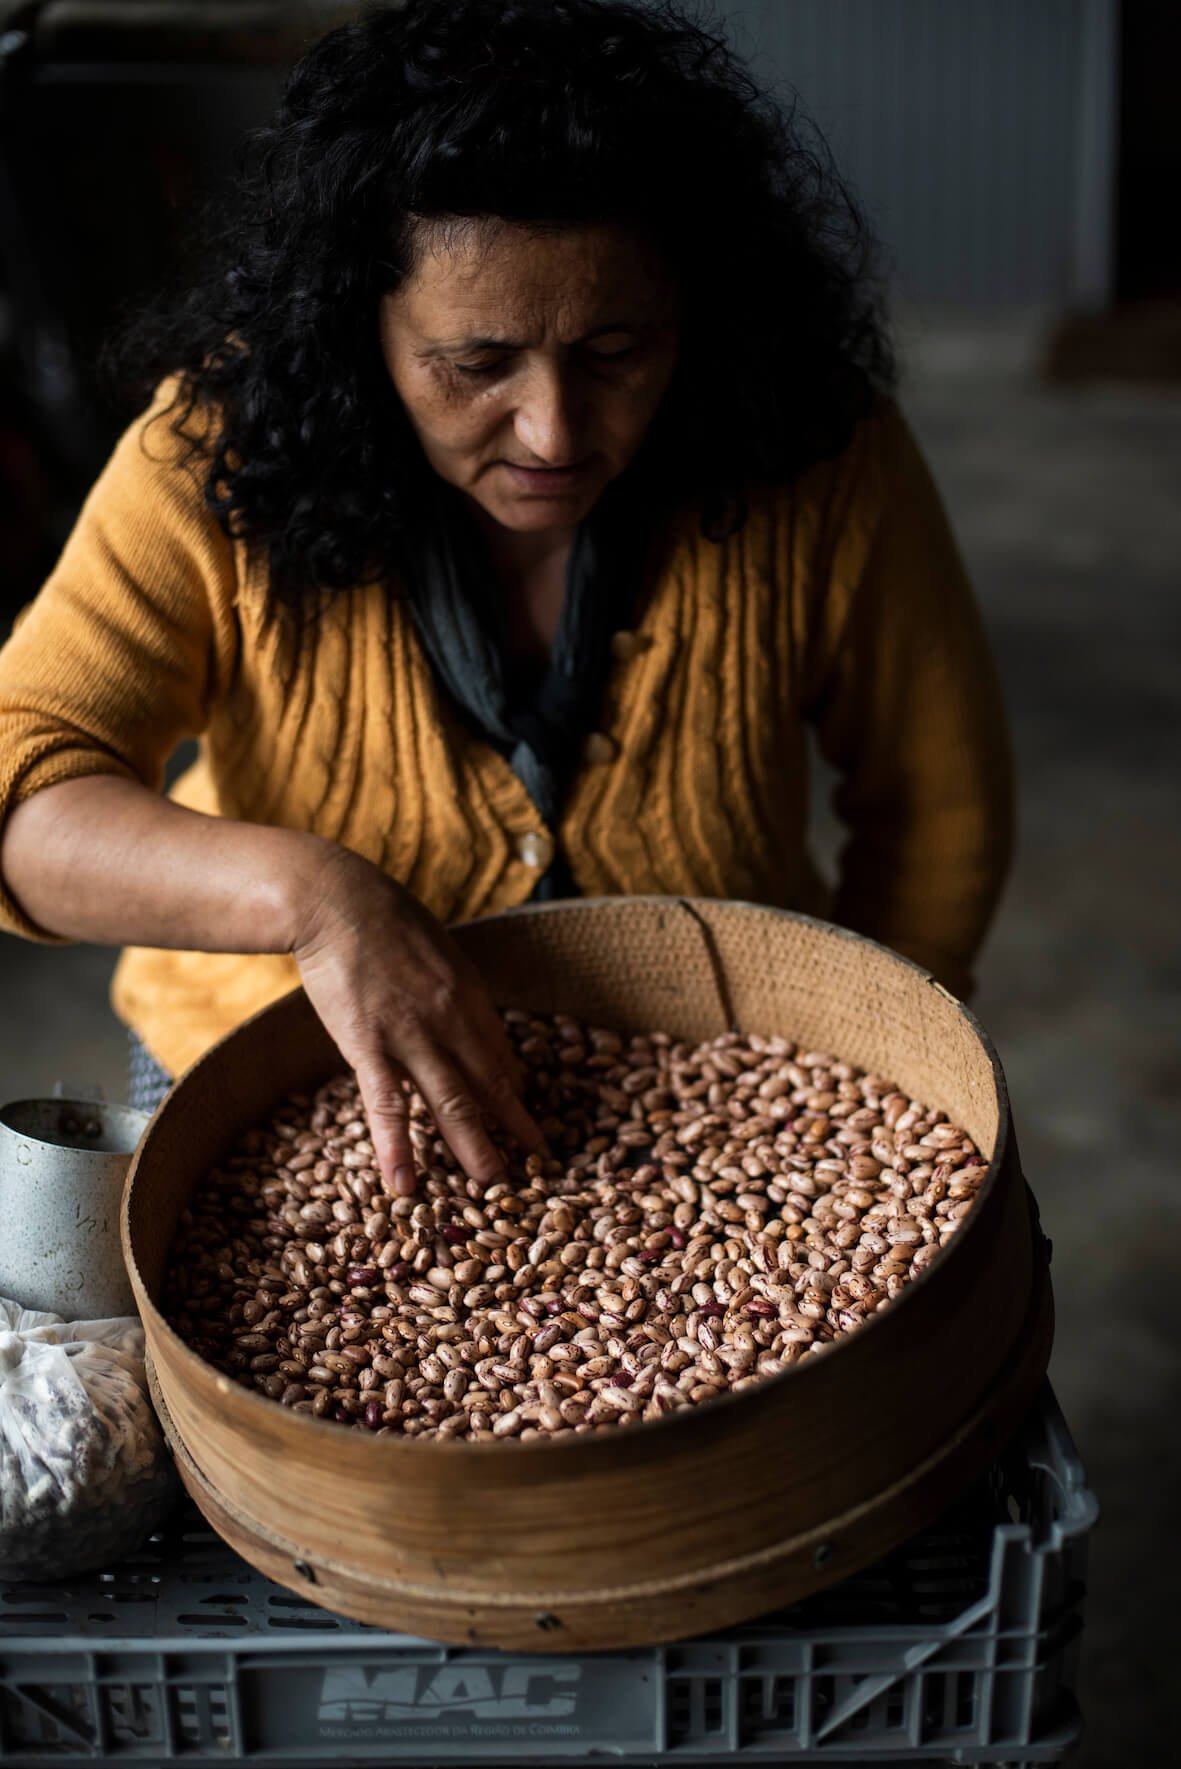 emilia reigado showing her beans